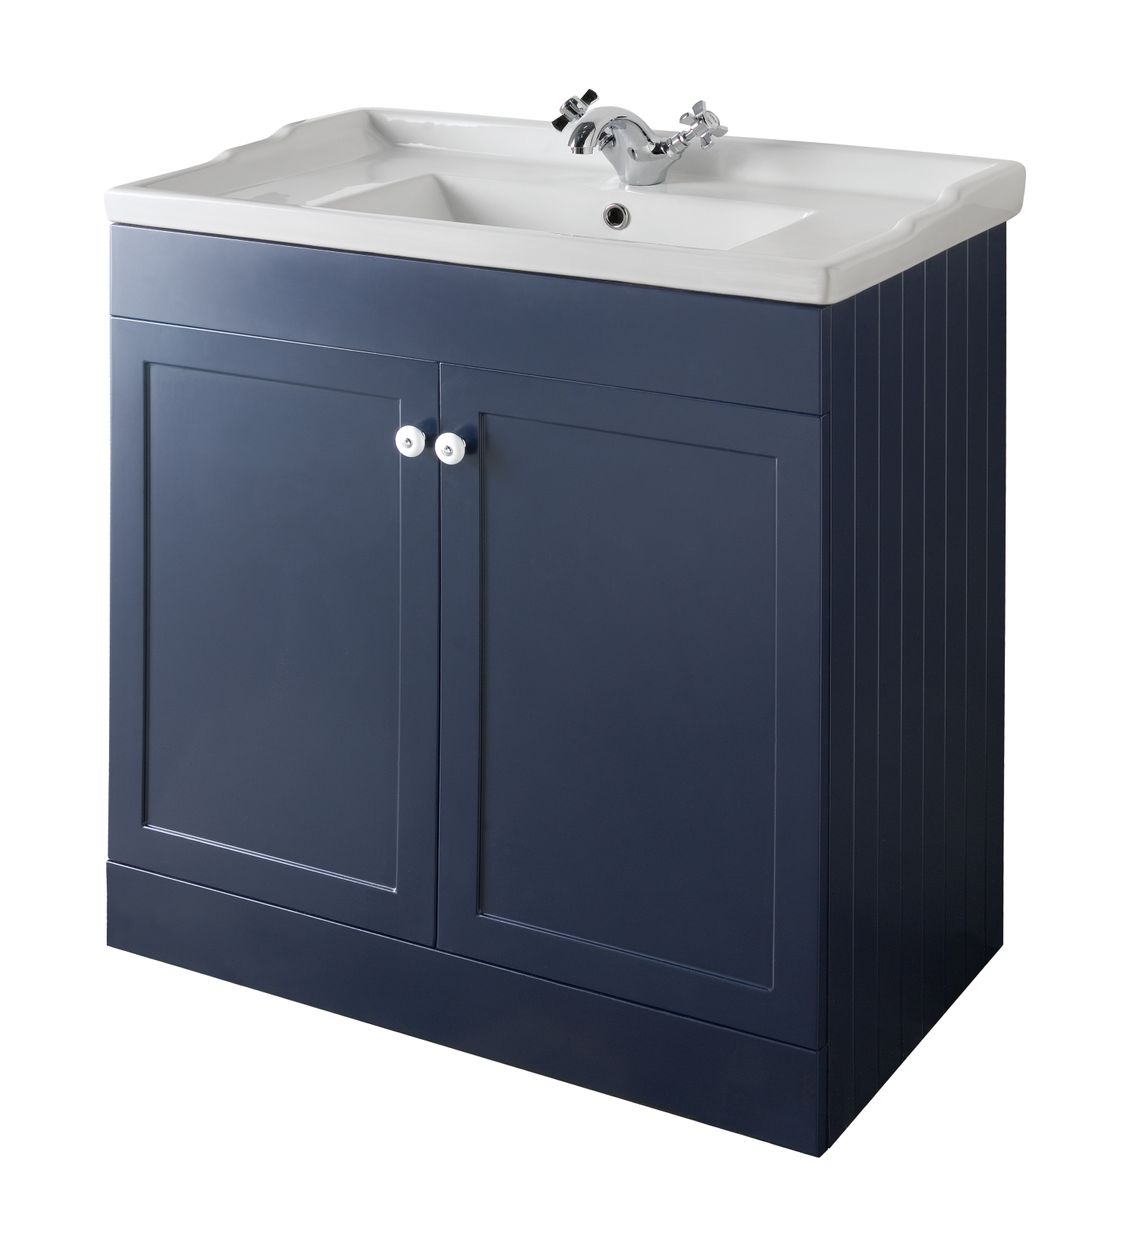 Bathroom Furniture, 800mm Unit - Matt Sapphire Blue, STRABANE WHOLESALE LTD, Strabane, Co. Tyrone